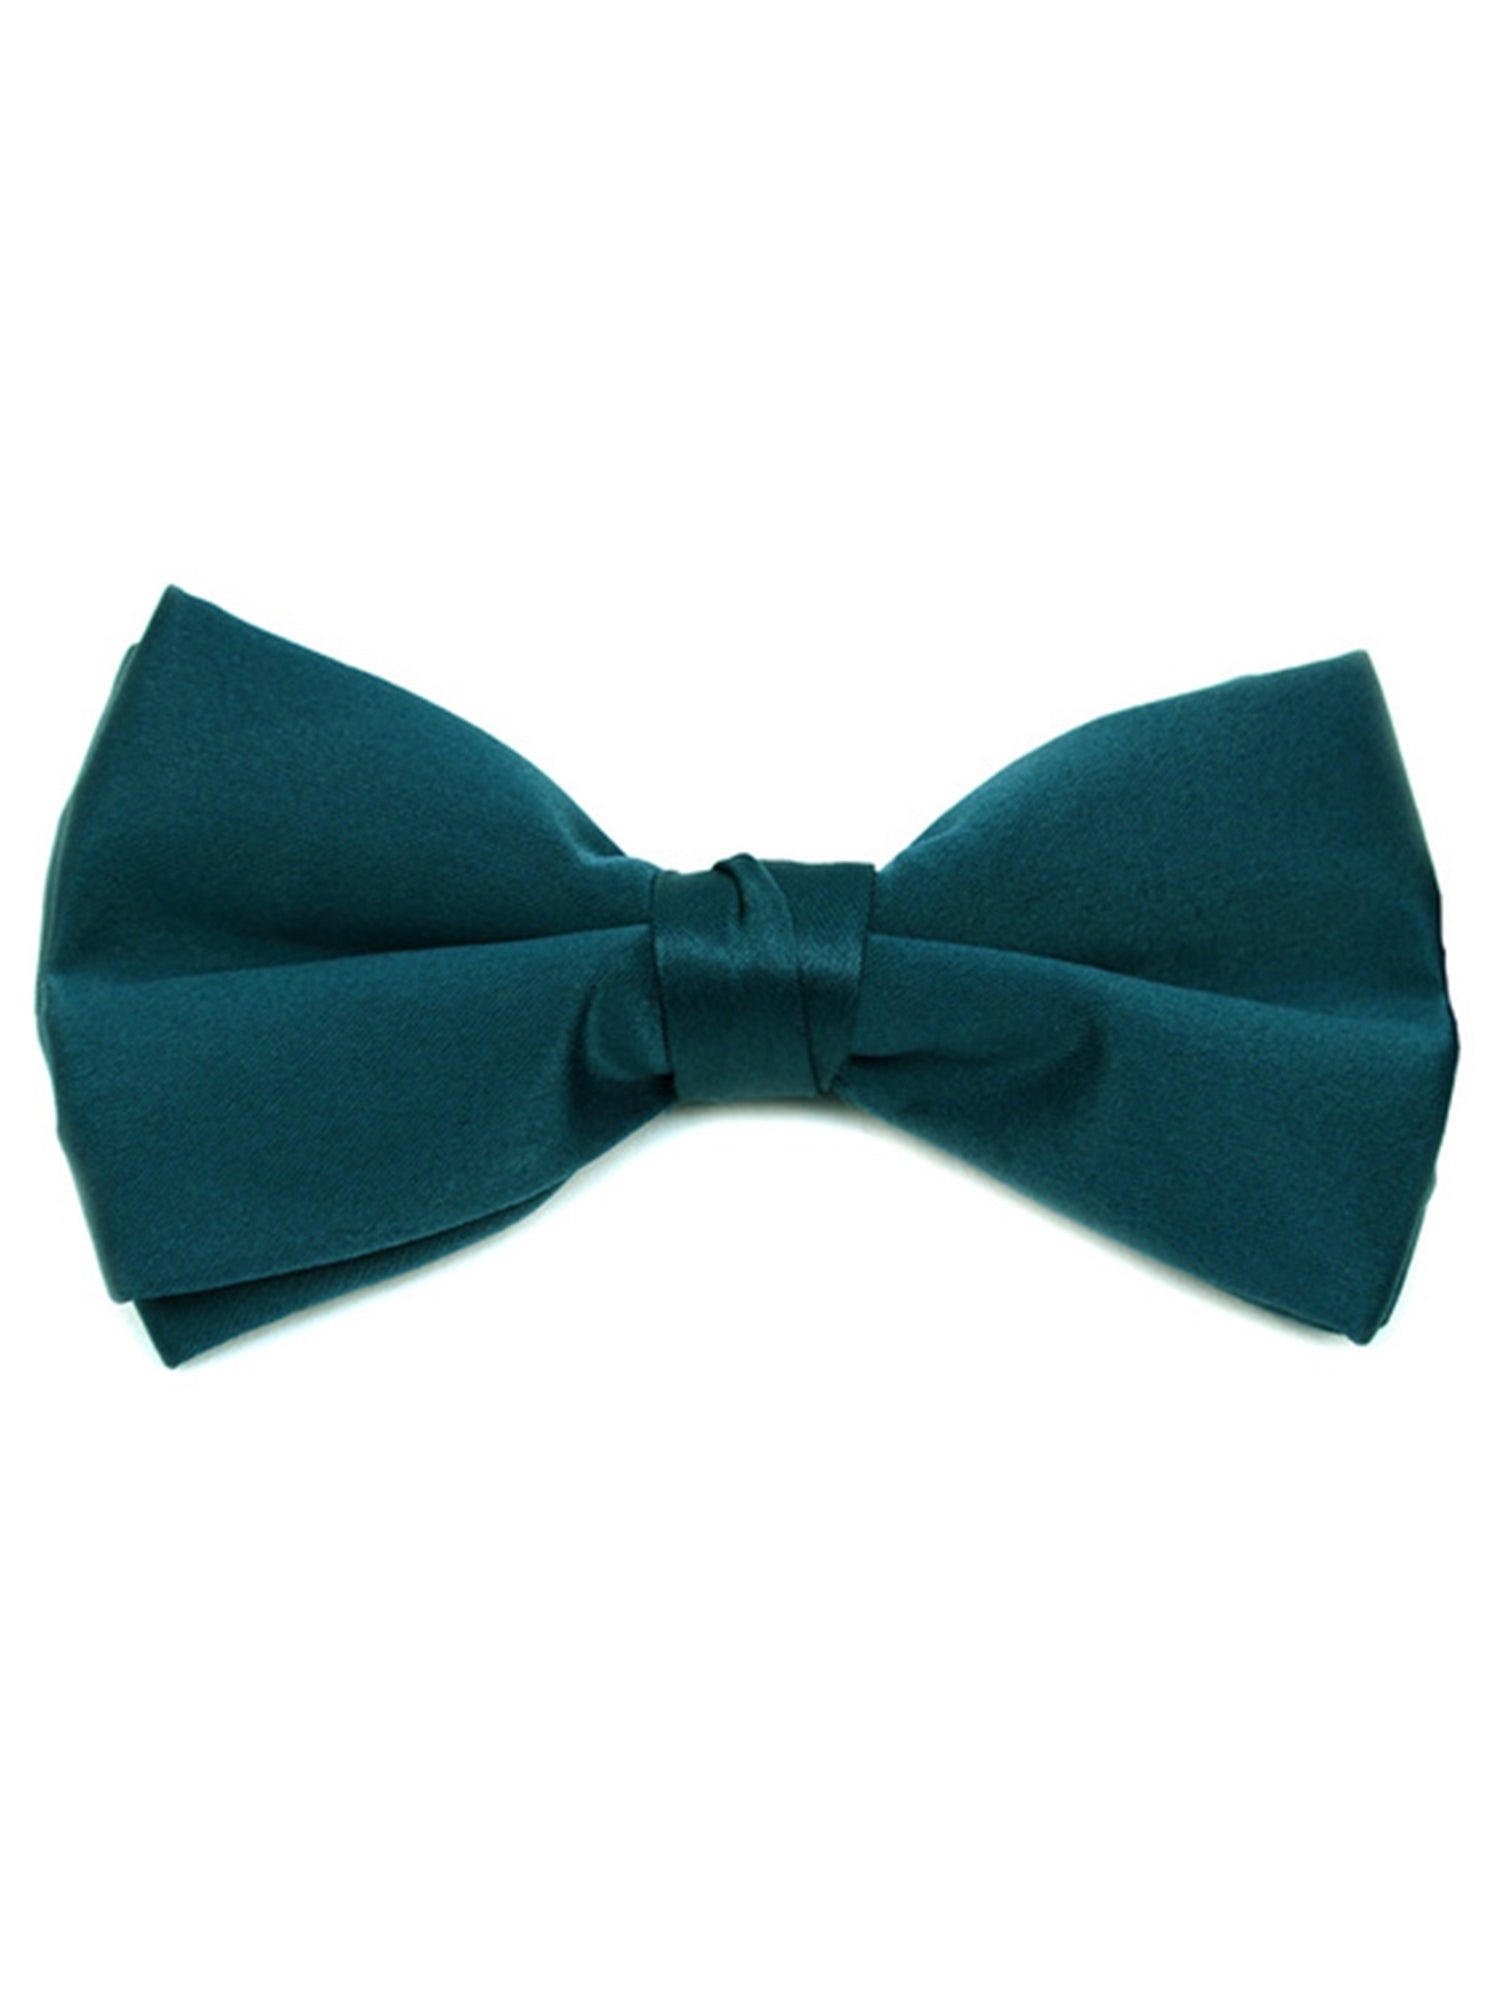 Men's Pre-tied Clip On Bow Tie - Formal Tuxedo Solid Color Men's Solid Color Bow Tie TheDapperTie Dark Green One Size 